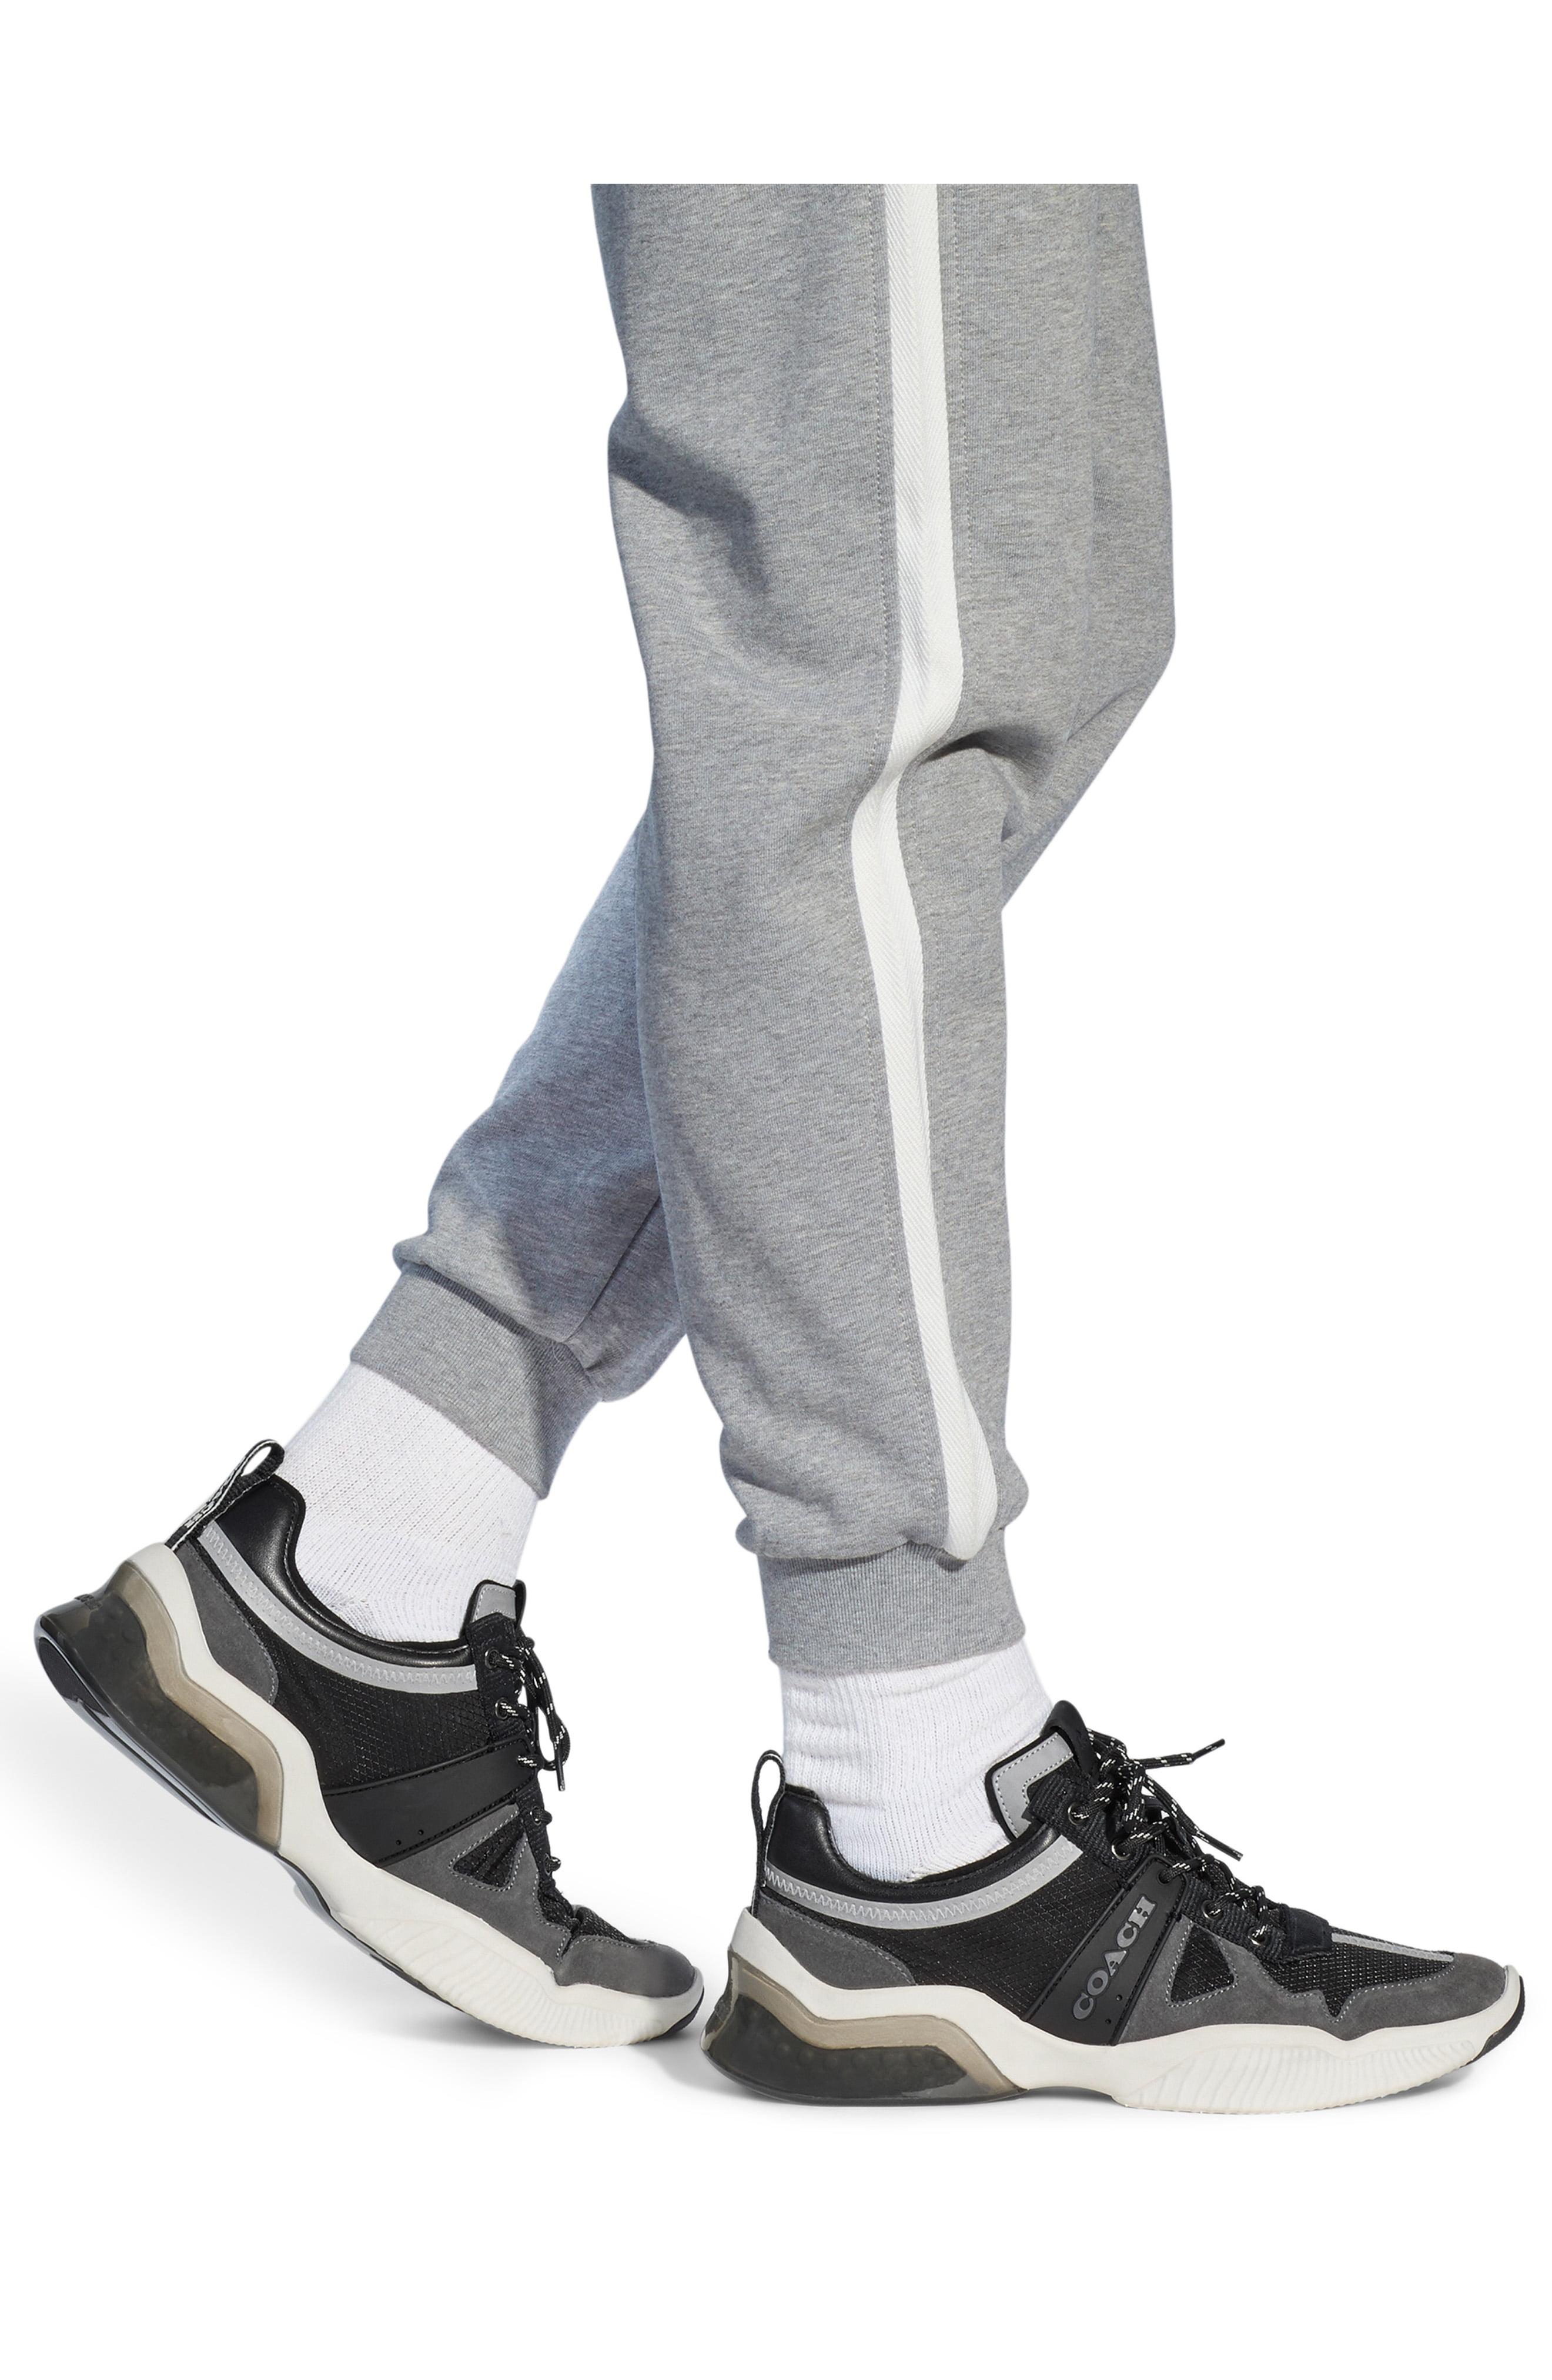 COACH Citysole Runner Sneaker in Black for Men - Lyst